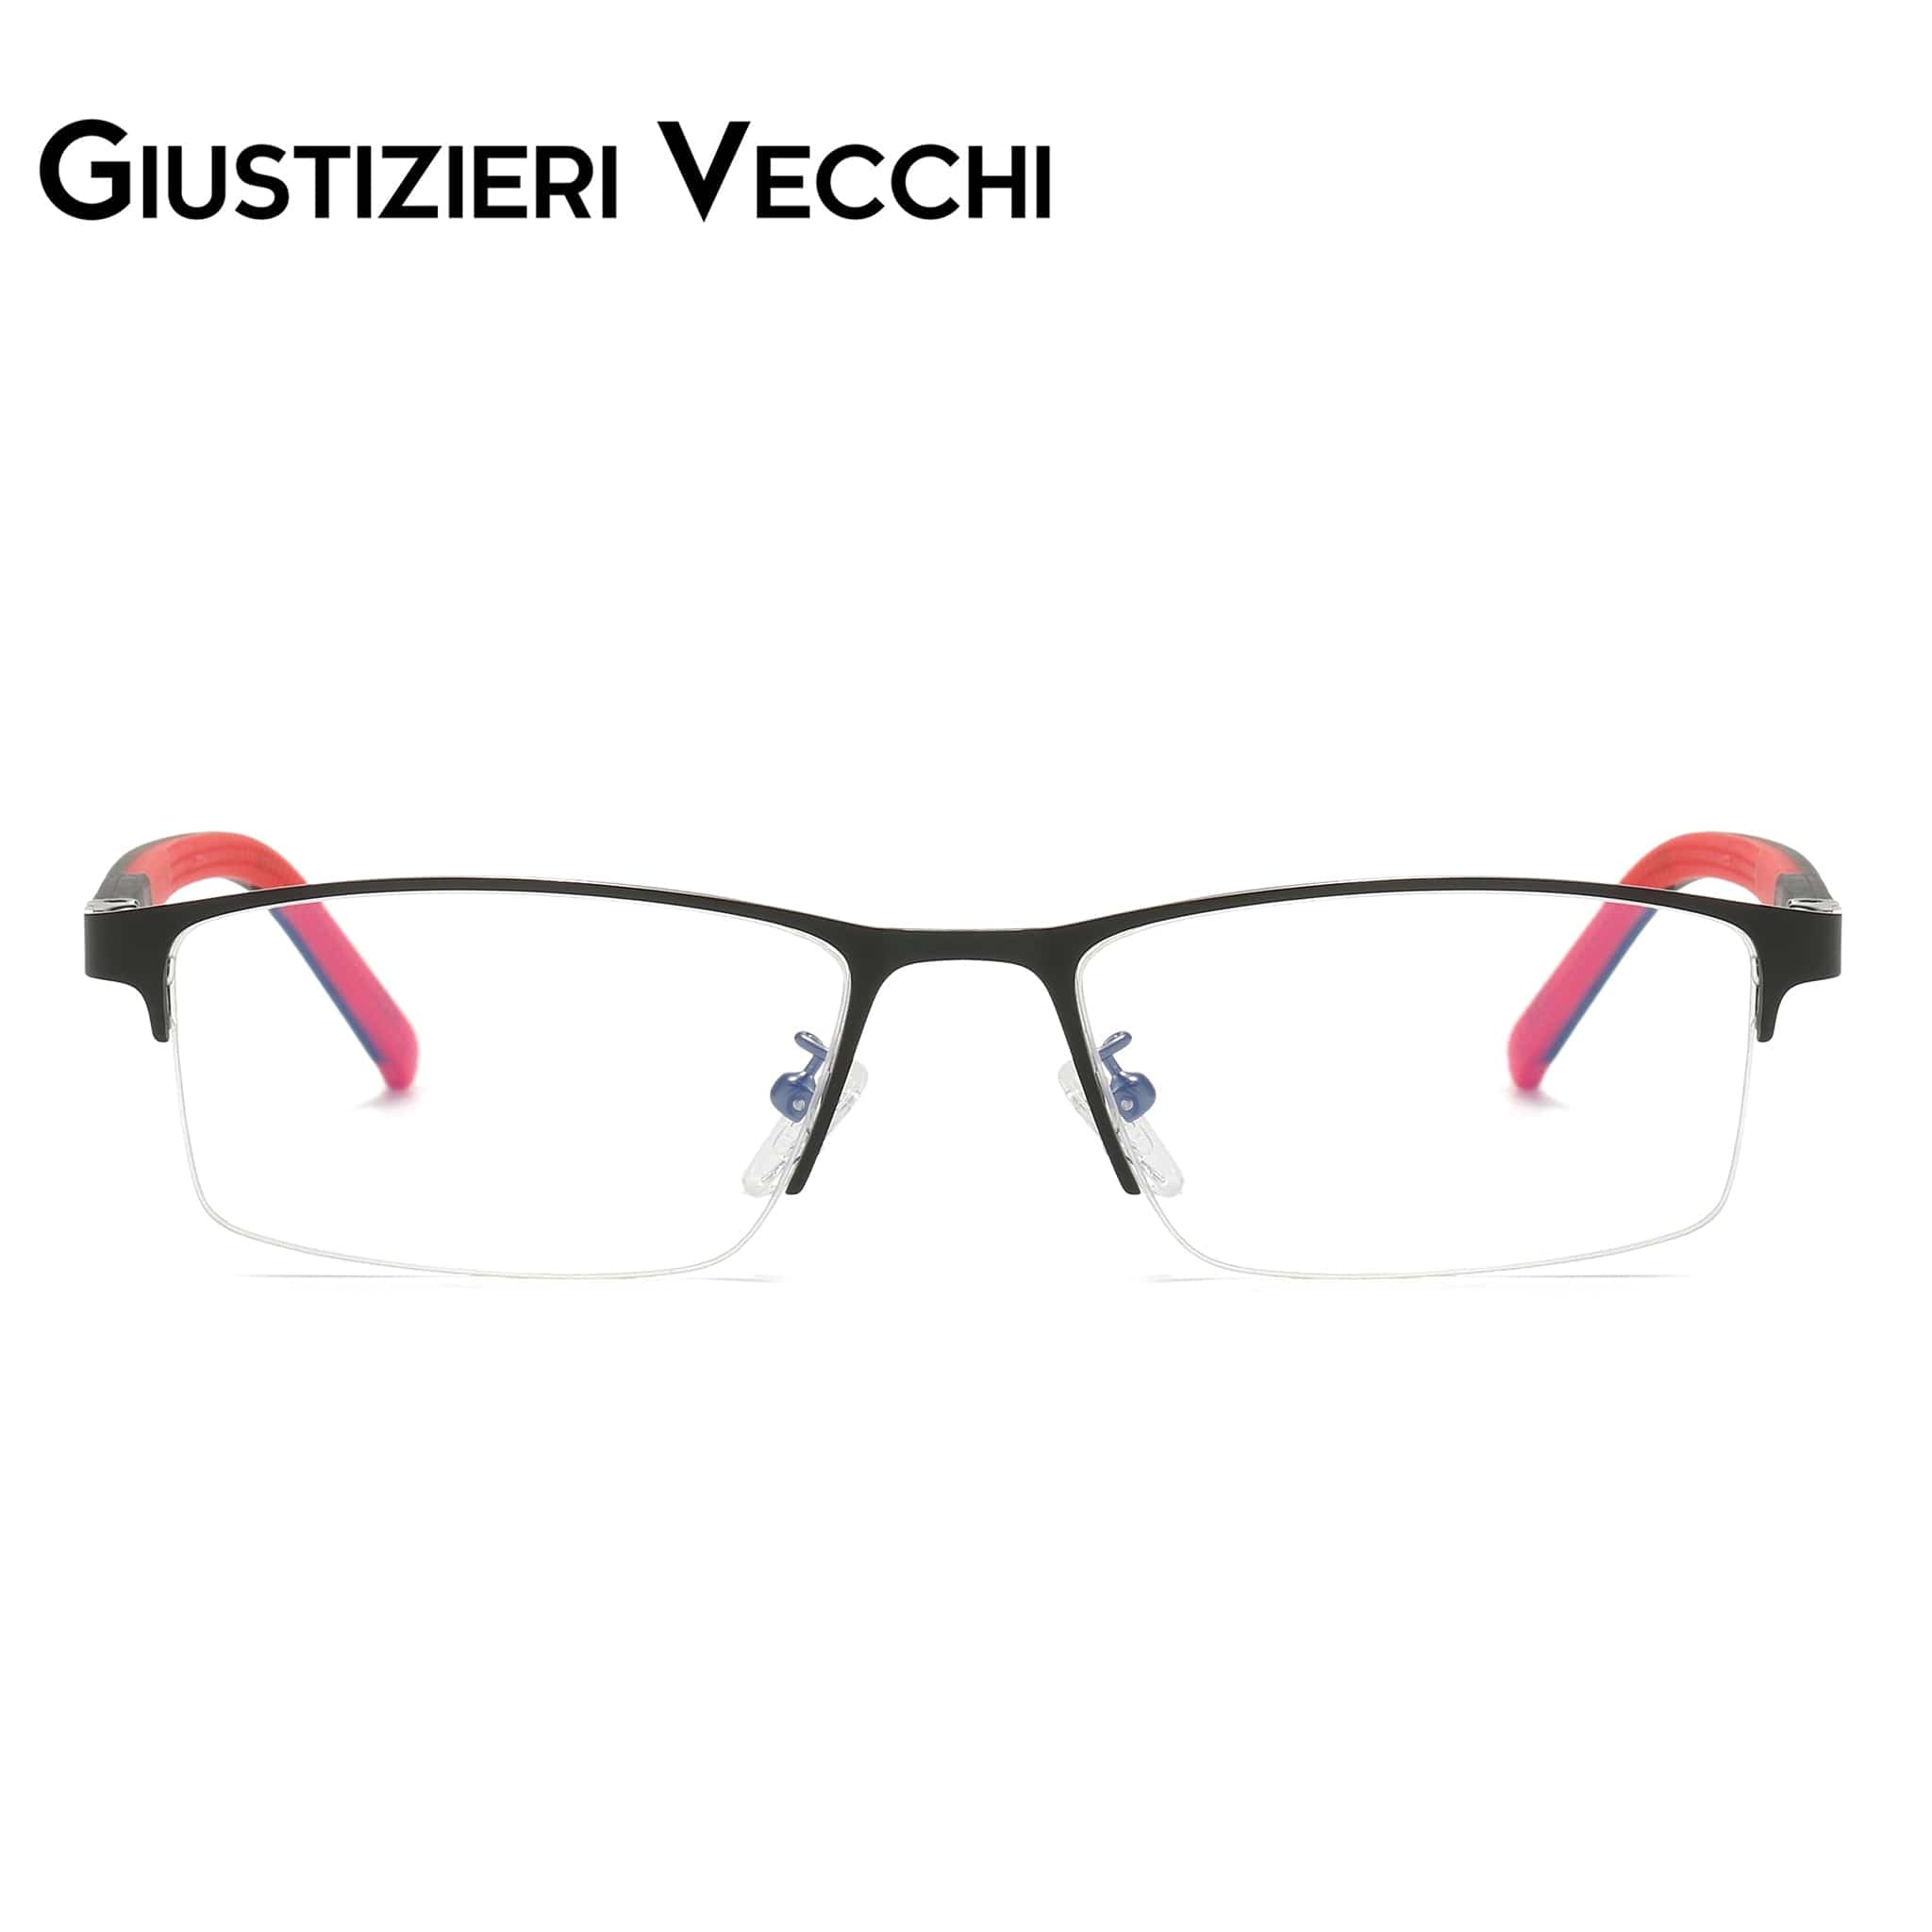 GIUSTIZIERI VECCHI Eyeglasses Large / Black with Red HydroFlash Uno